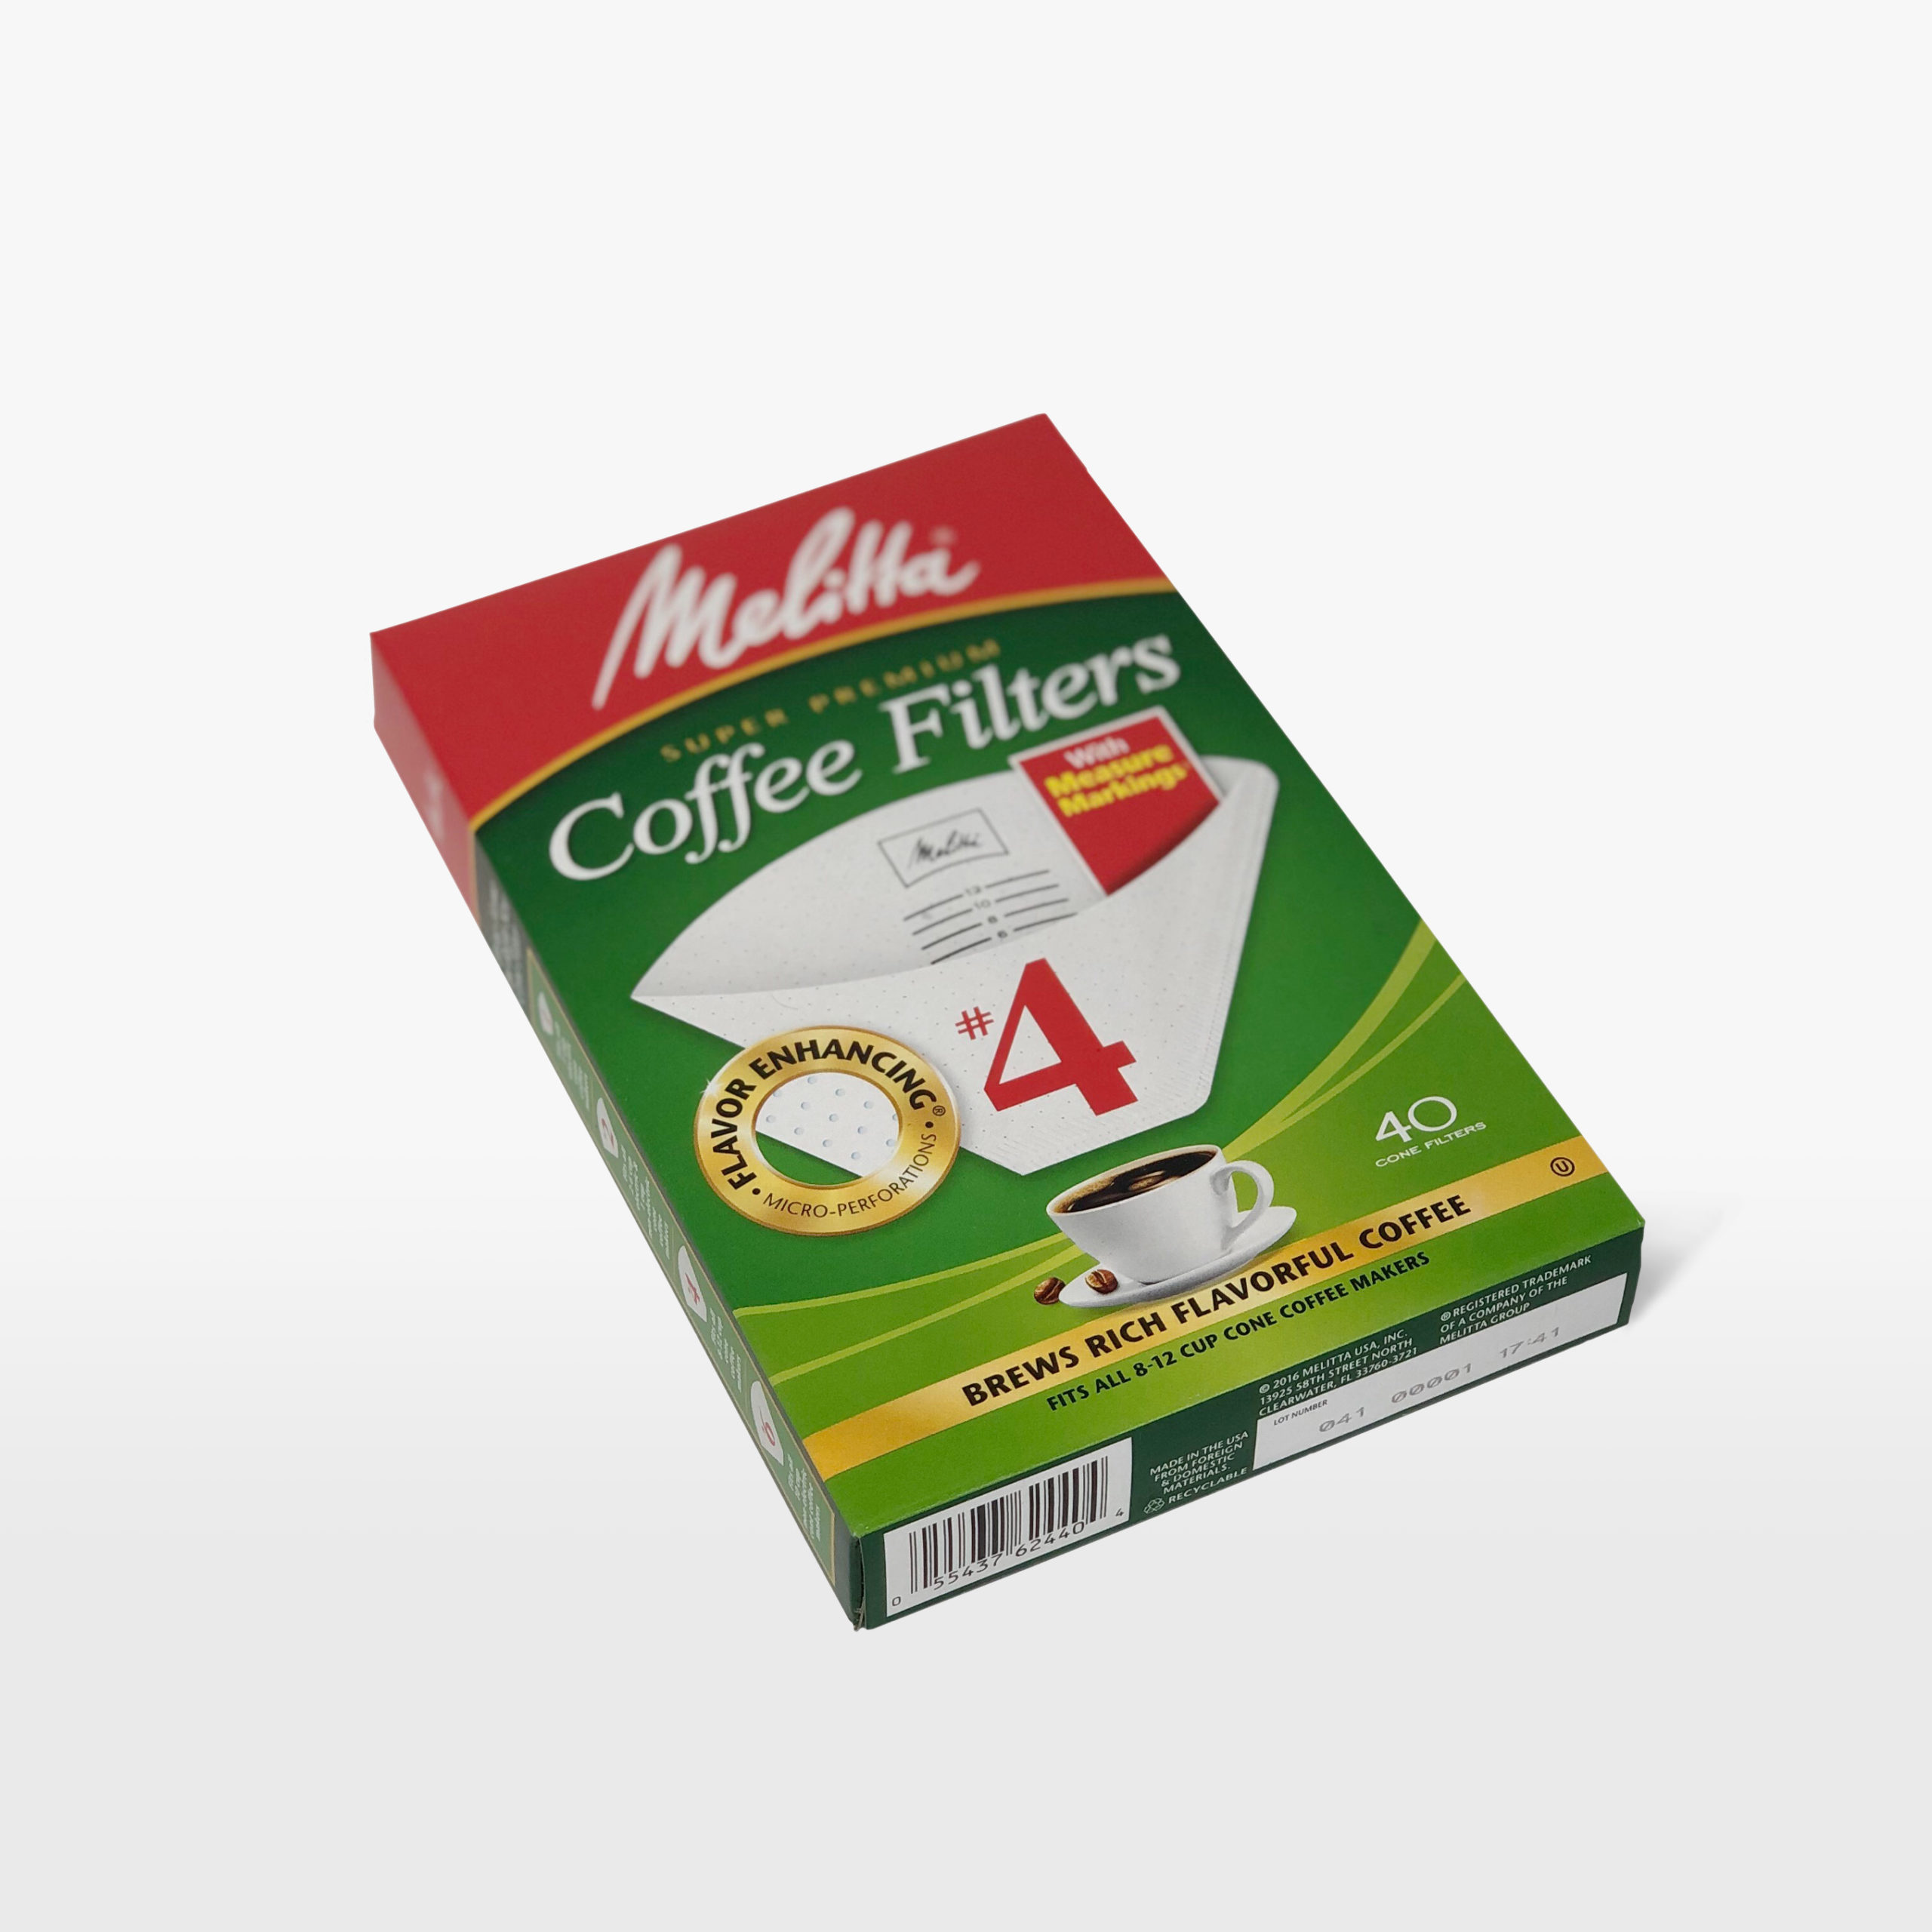 Melitta 4 Cone Filter Stone Creek Coffee